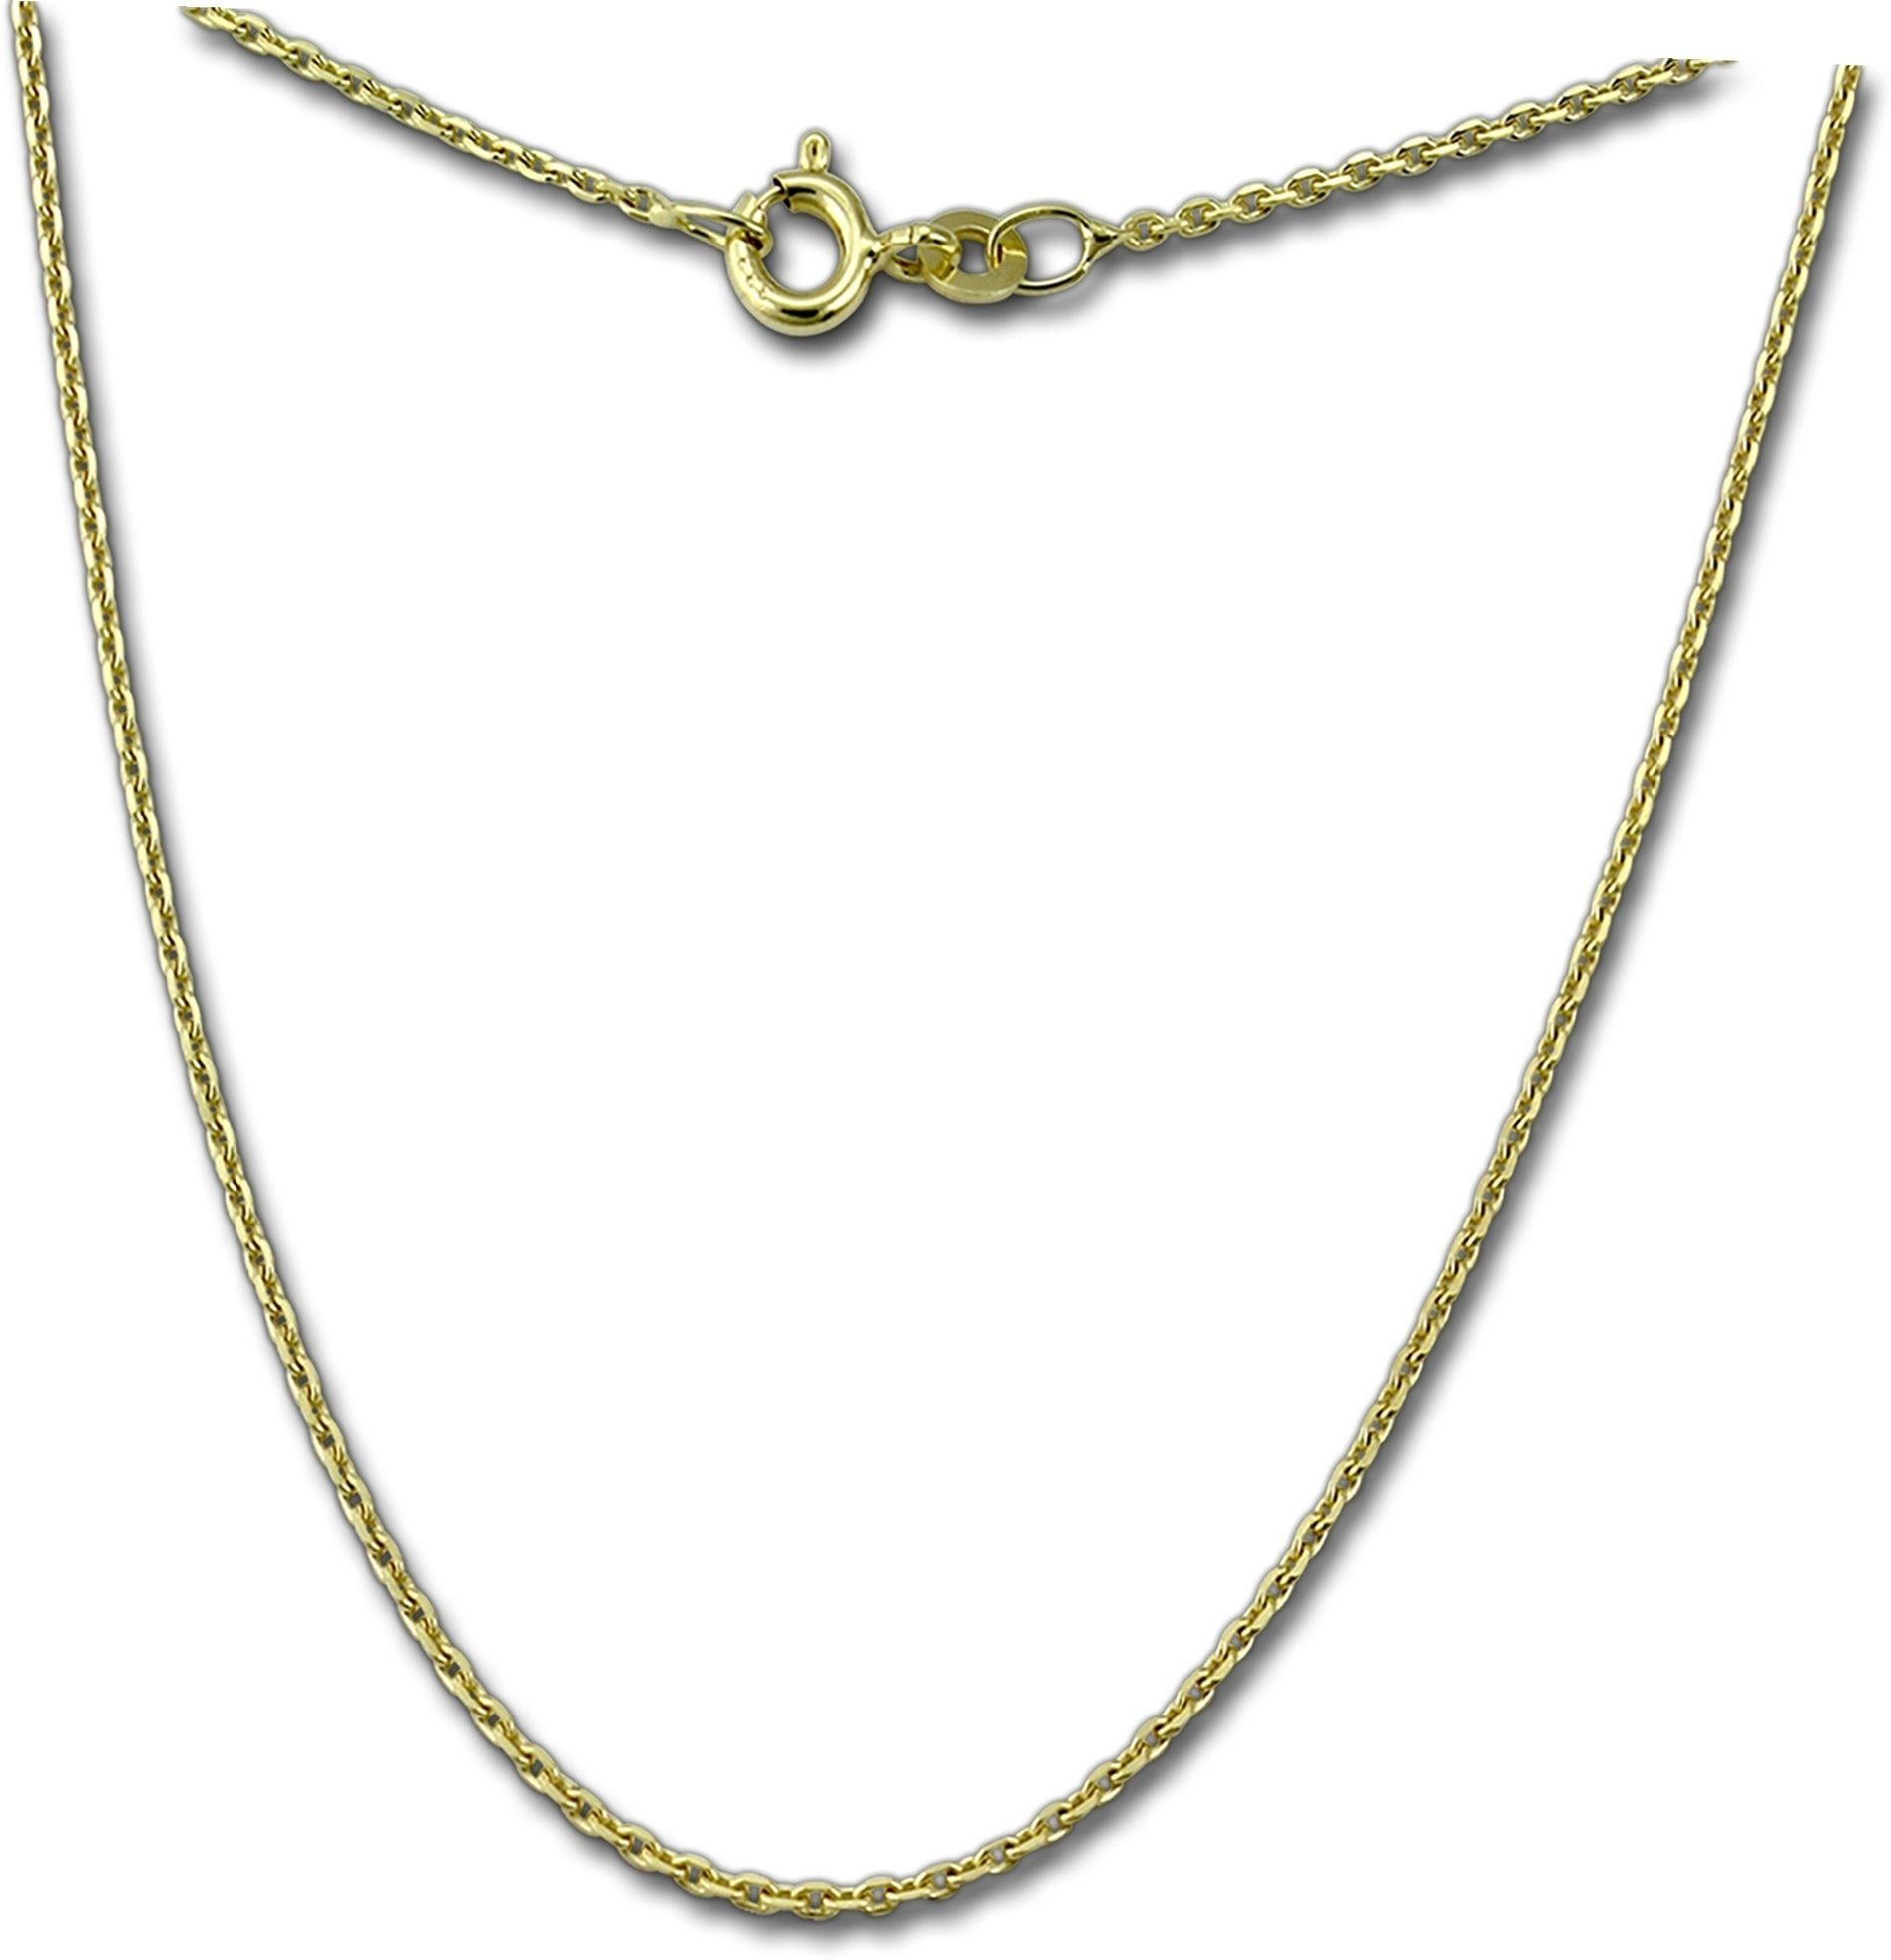 Halskette 333er 333 Echtgold, Colliers 42cm, GoldDream - Gelbgold GoldDream (Collier), Halskette Collier Goldkette Damen 333Gold Karat 8